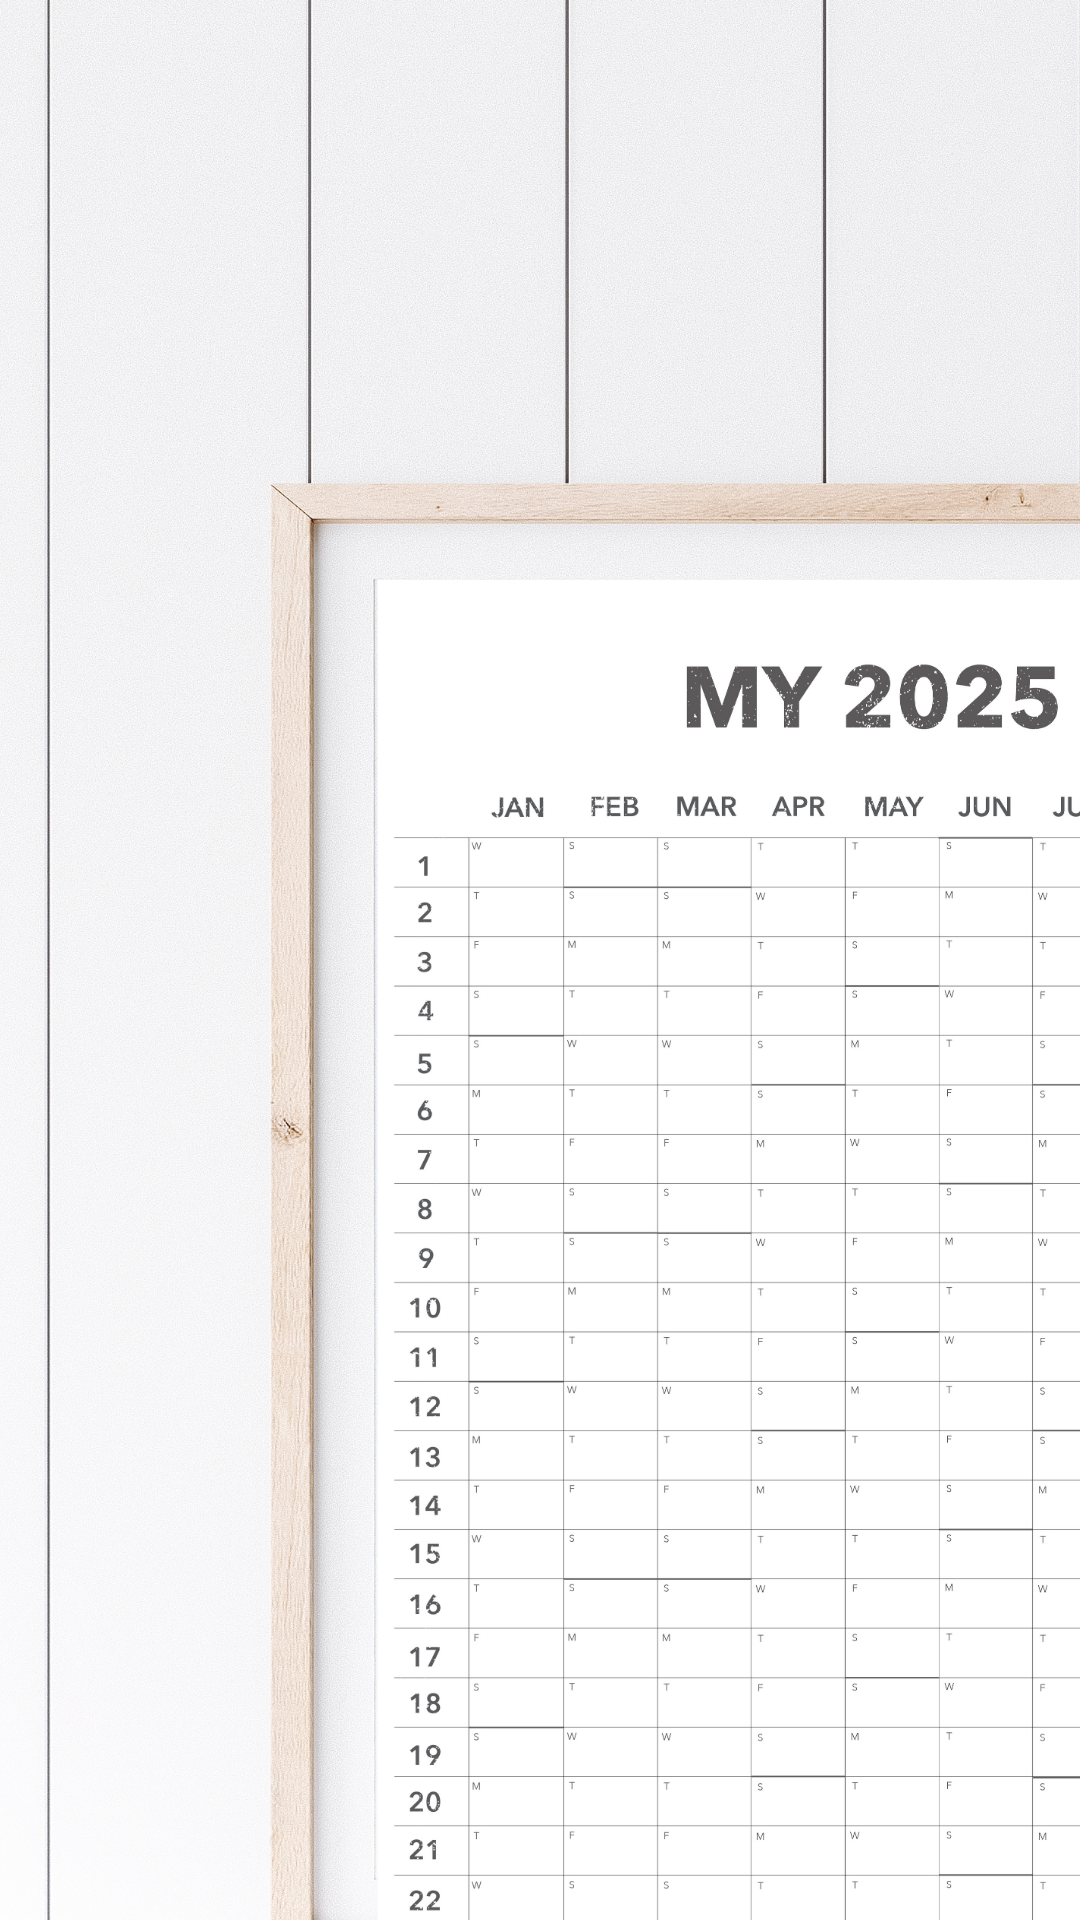 My 2025 Plan Wall Calendar - 18" x 24" - PHYSICAL COPY